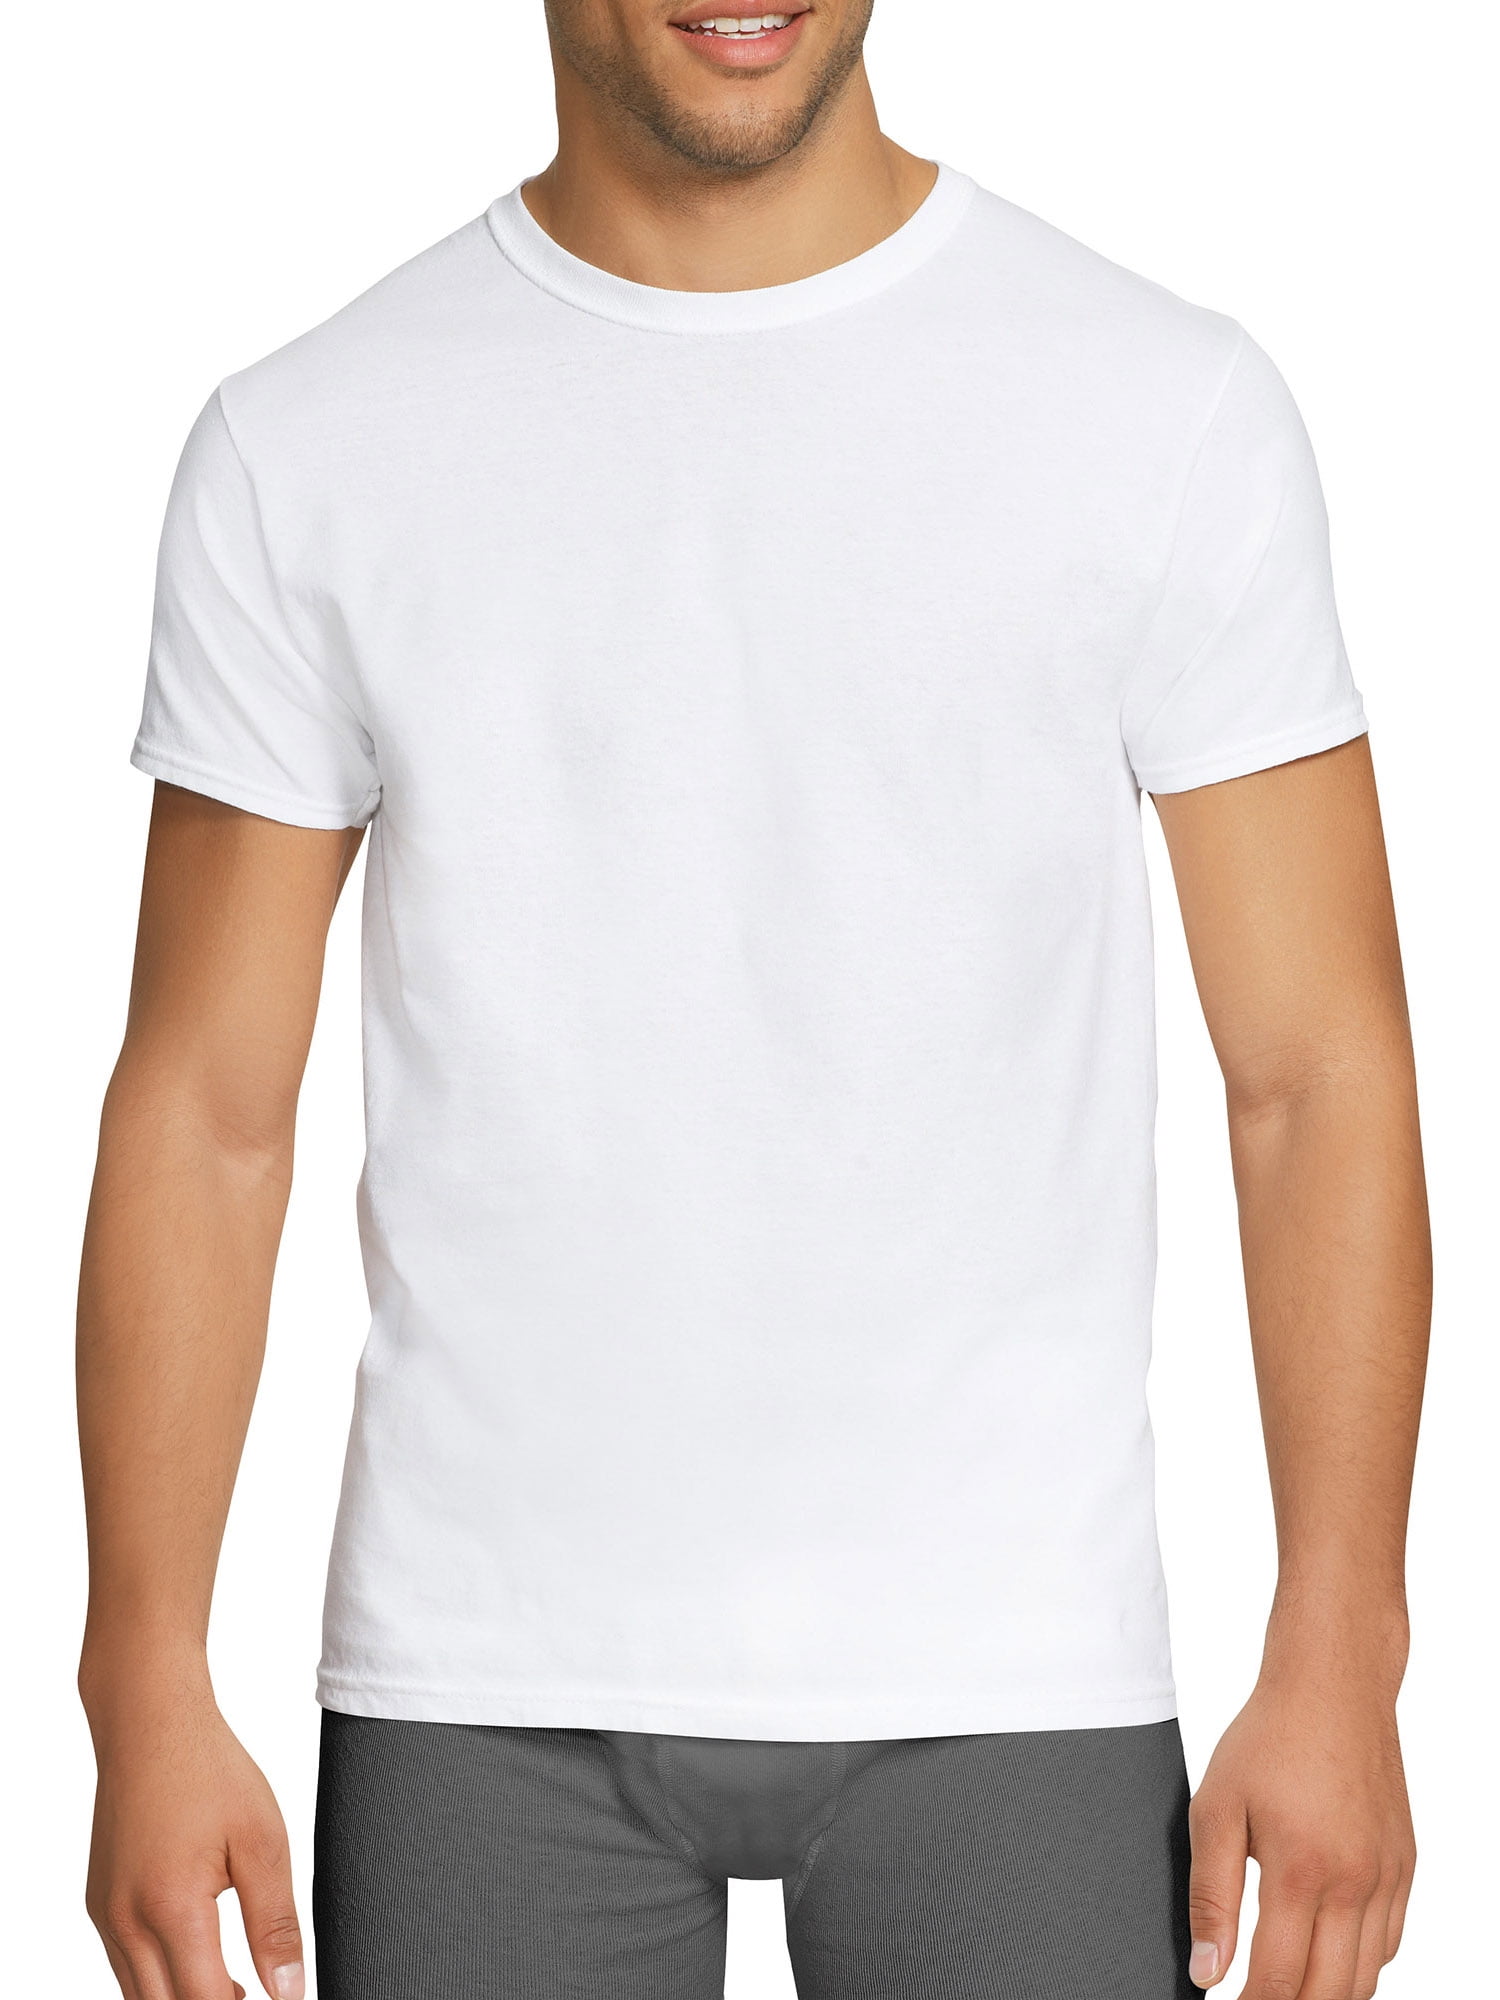 Hanes Men's Stretch White Crew T-Shirt Undershirts, 3 Pack 